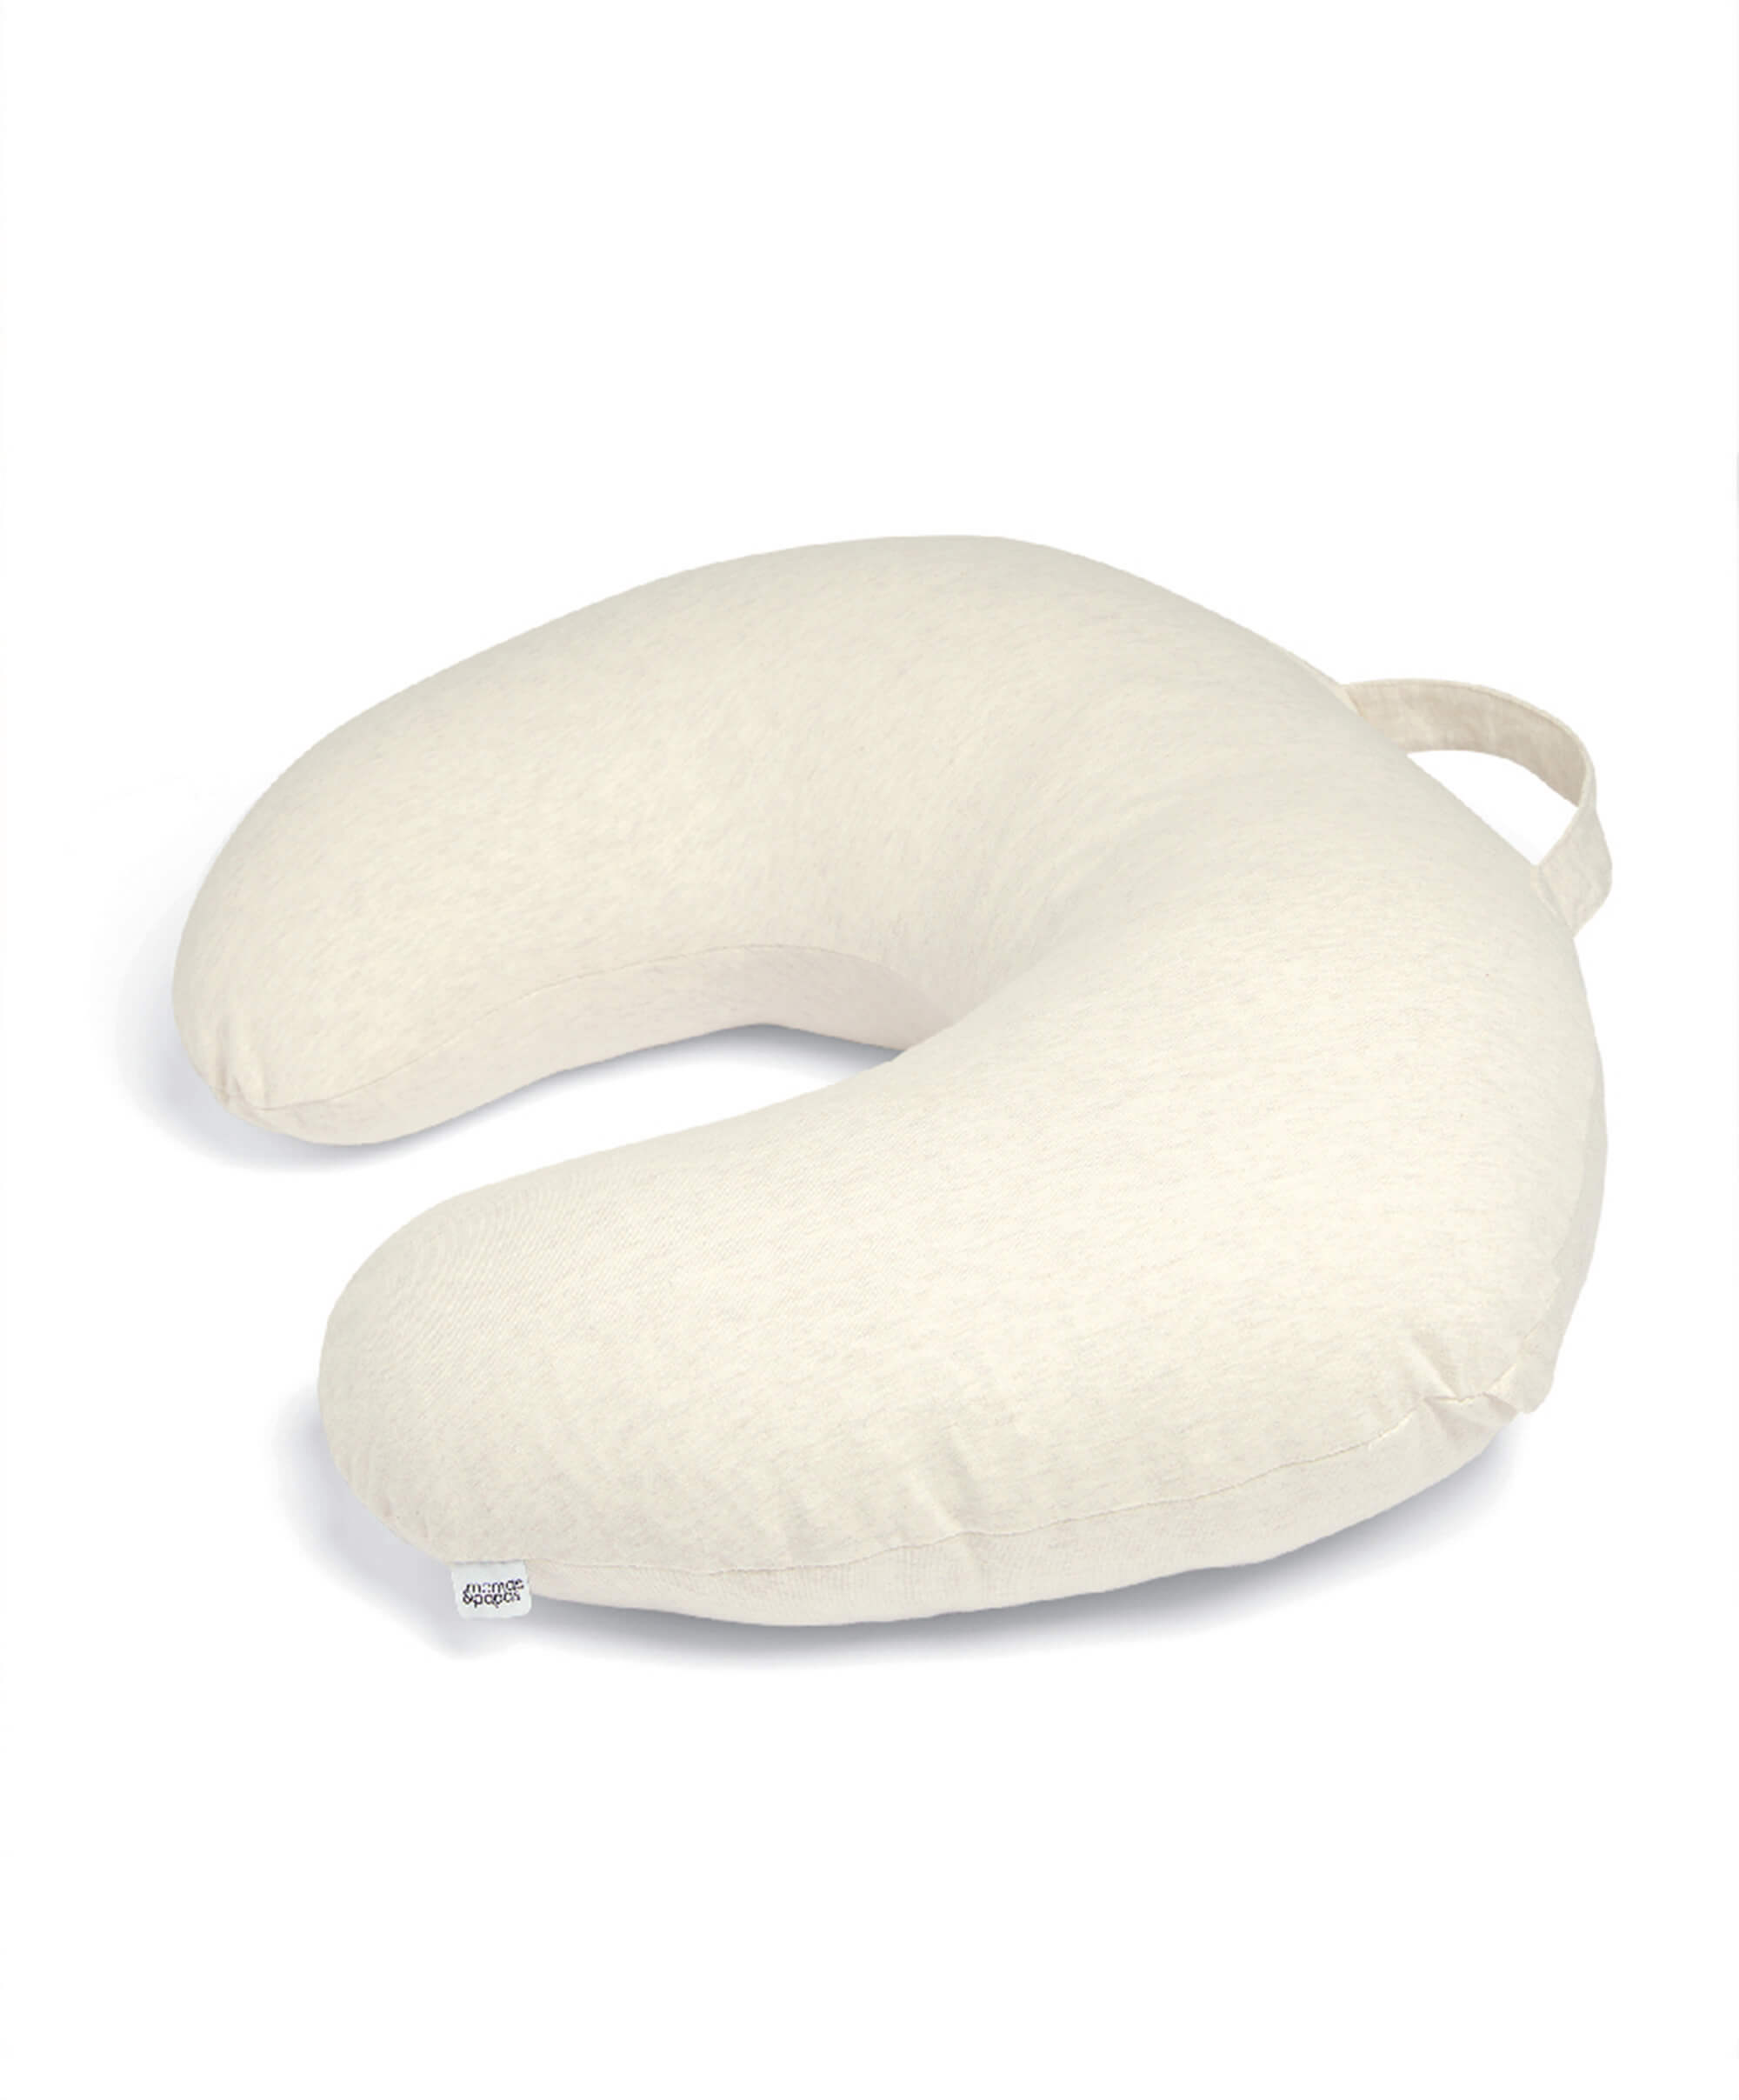 Elvie Pump / Stride Nipple Cushions - 15mm (2 pack) – Mamas & Papas IE